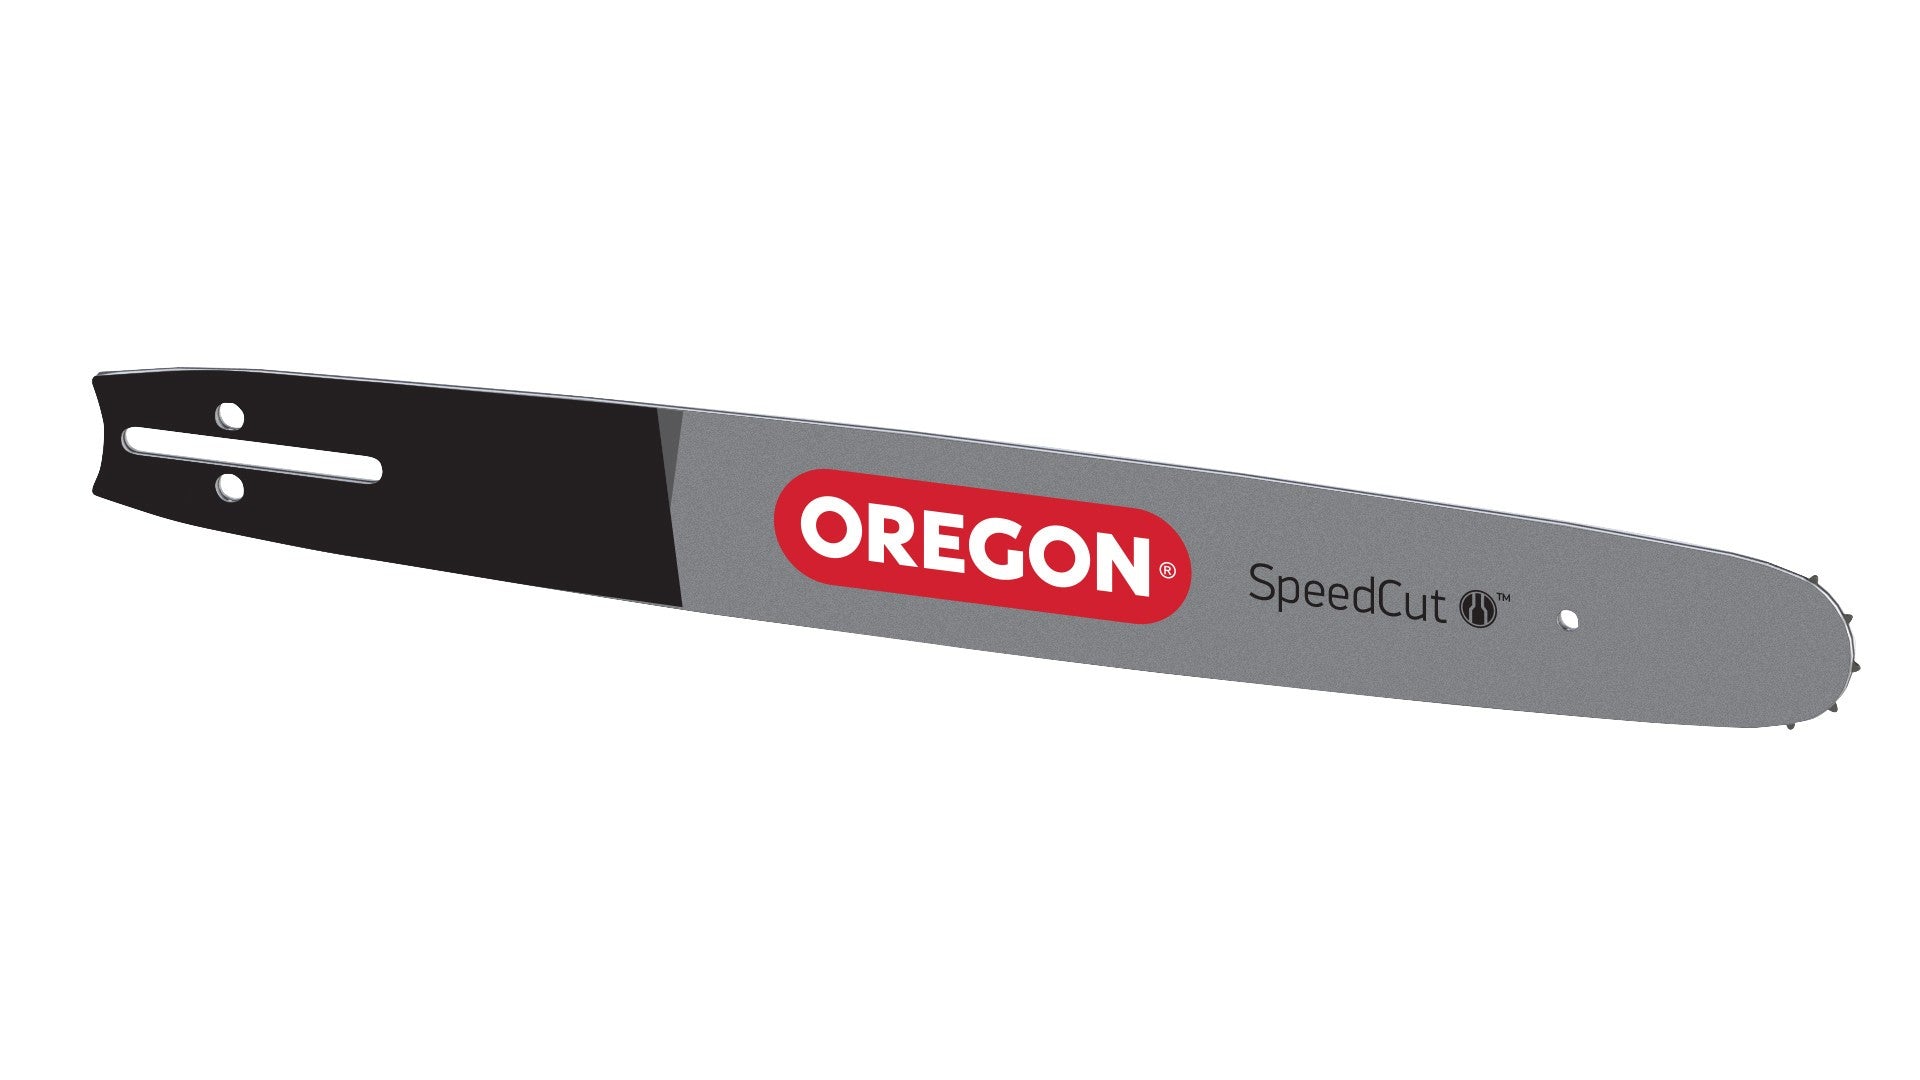 130TXLBK095 - Oregon 13" SpeedCut Chainsaw Guide Bar